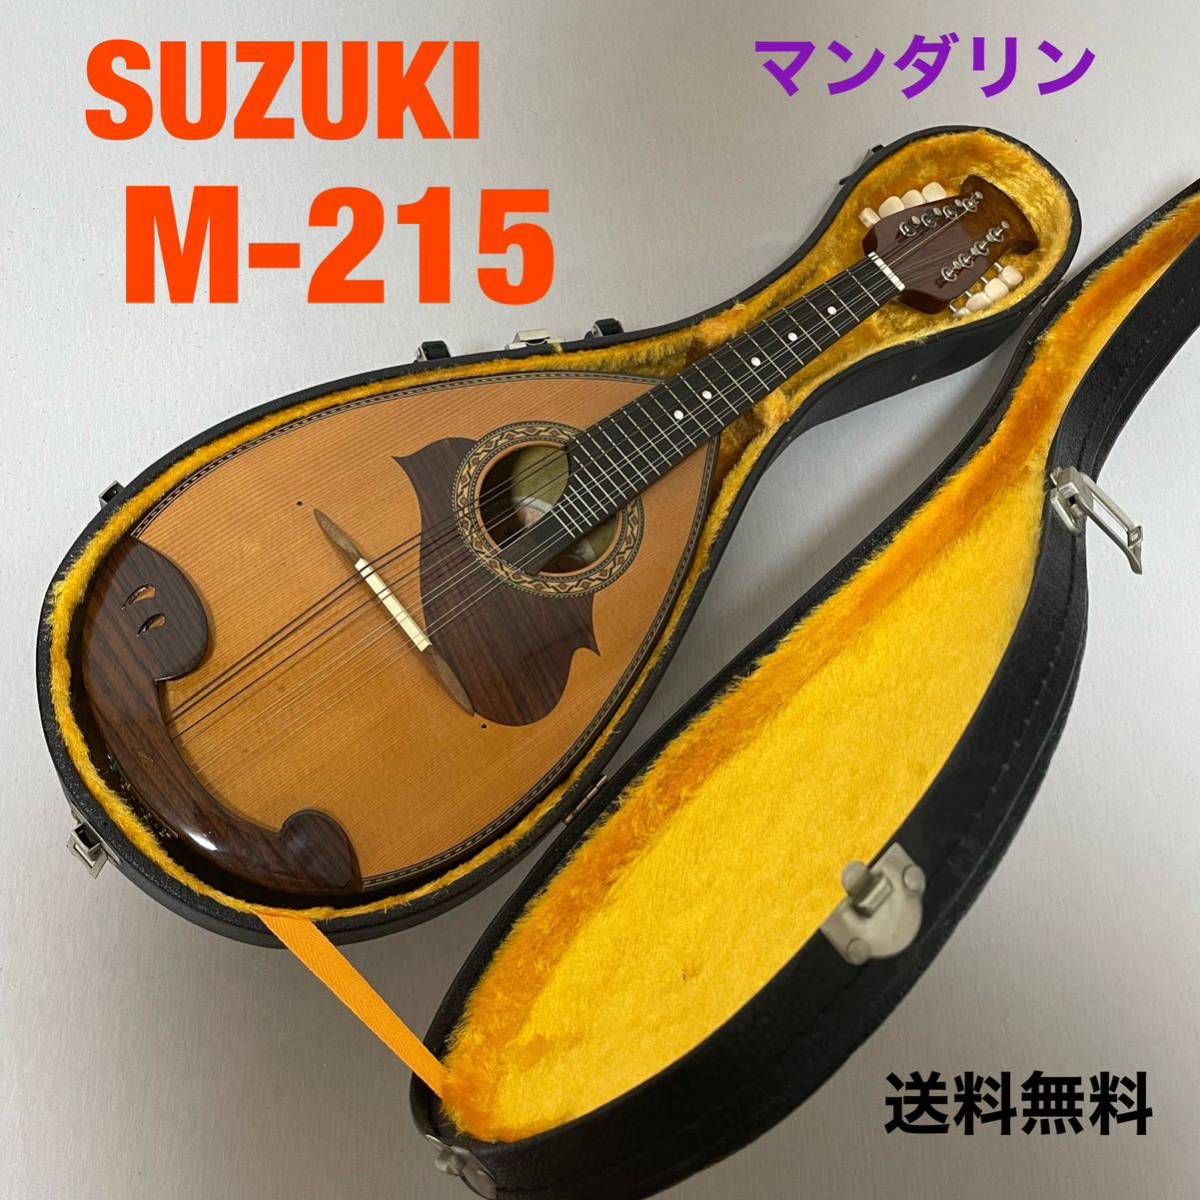 SUZUKI VIOLIN マンドリン モデルNo.M-215ハードケース付き - quifaest 